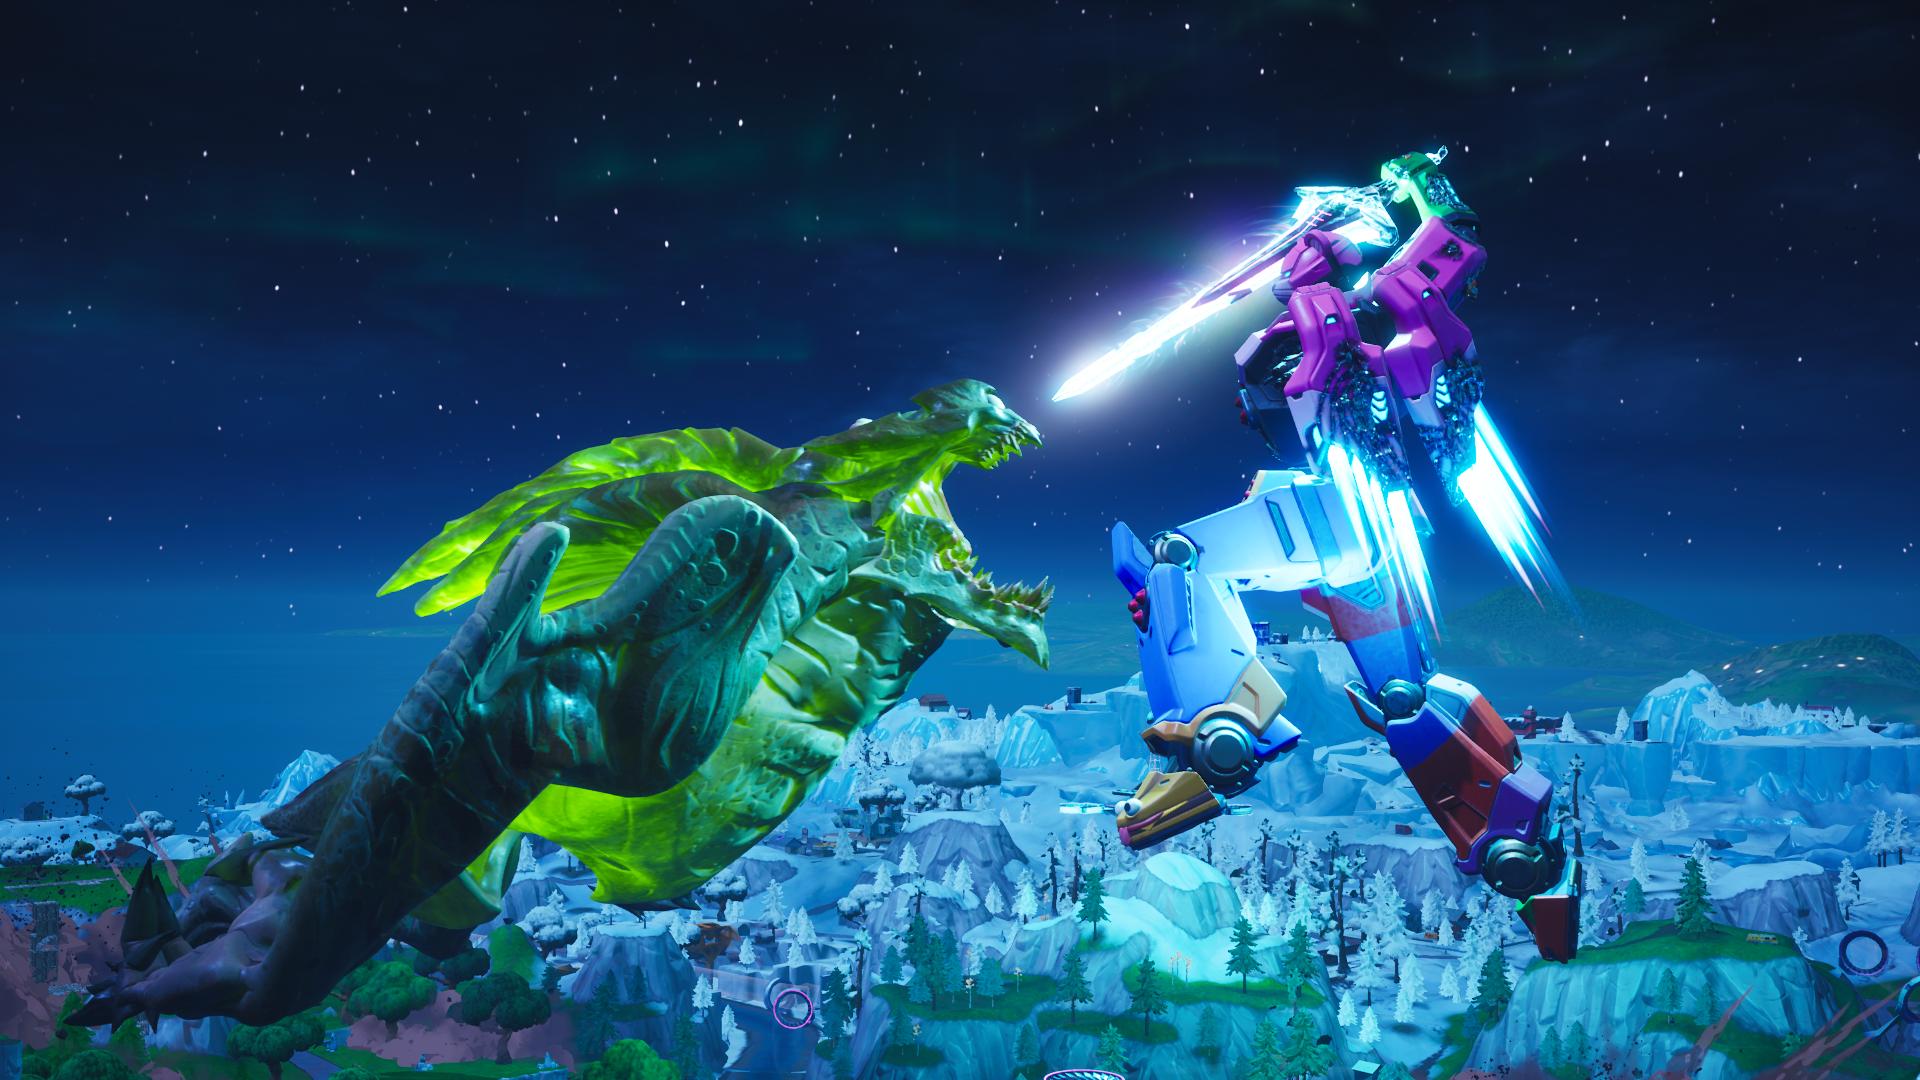 Fortnite Event Ends With Giant Robot Vs Monster Battle